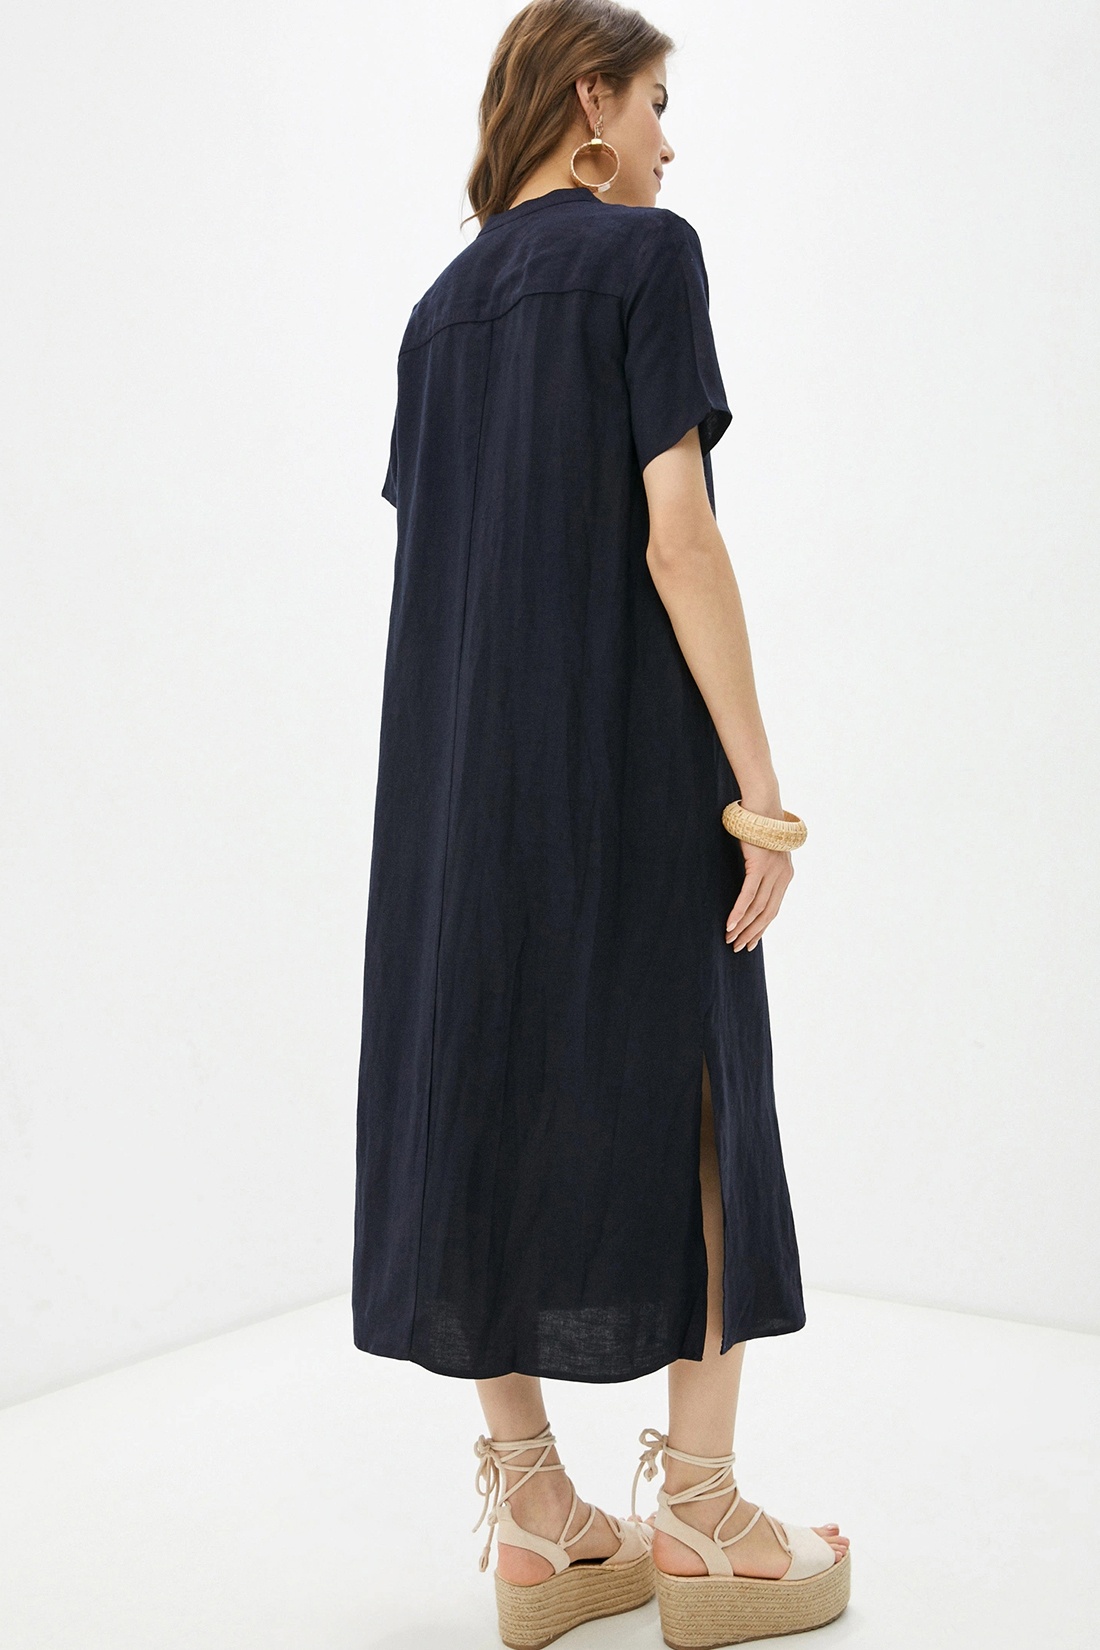 Платье (арт. baon B451039), размер XL, цвет синий Платье (арт. baon B451039) - фото 2